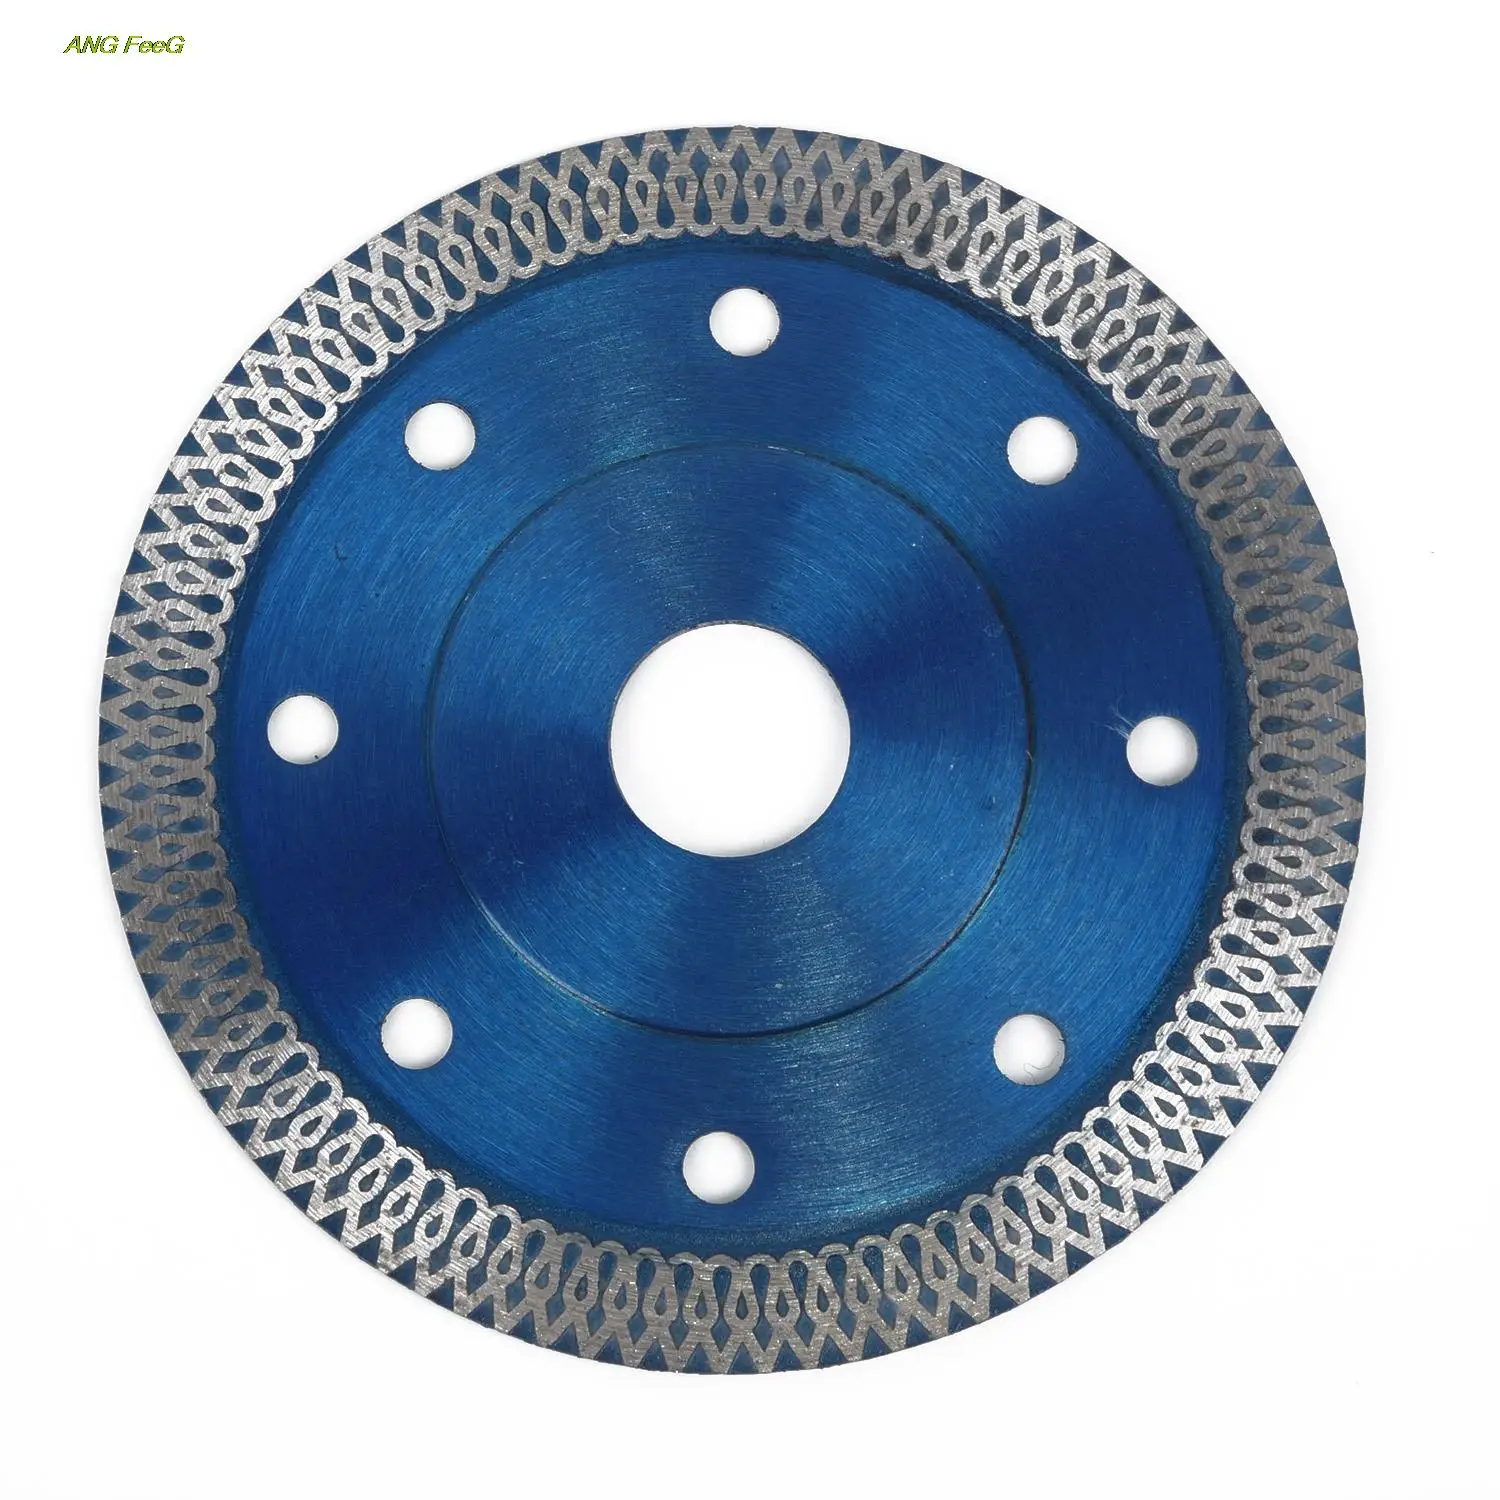 105MM Thin Diamond Turbo Cutting Discs Saw Blade For Granite Tile 4 Inch Workshop Power Tools Accessories circular para azulejo